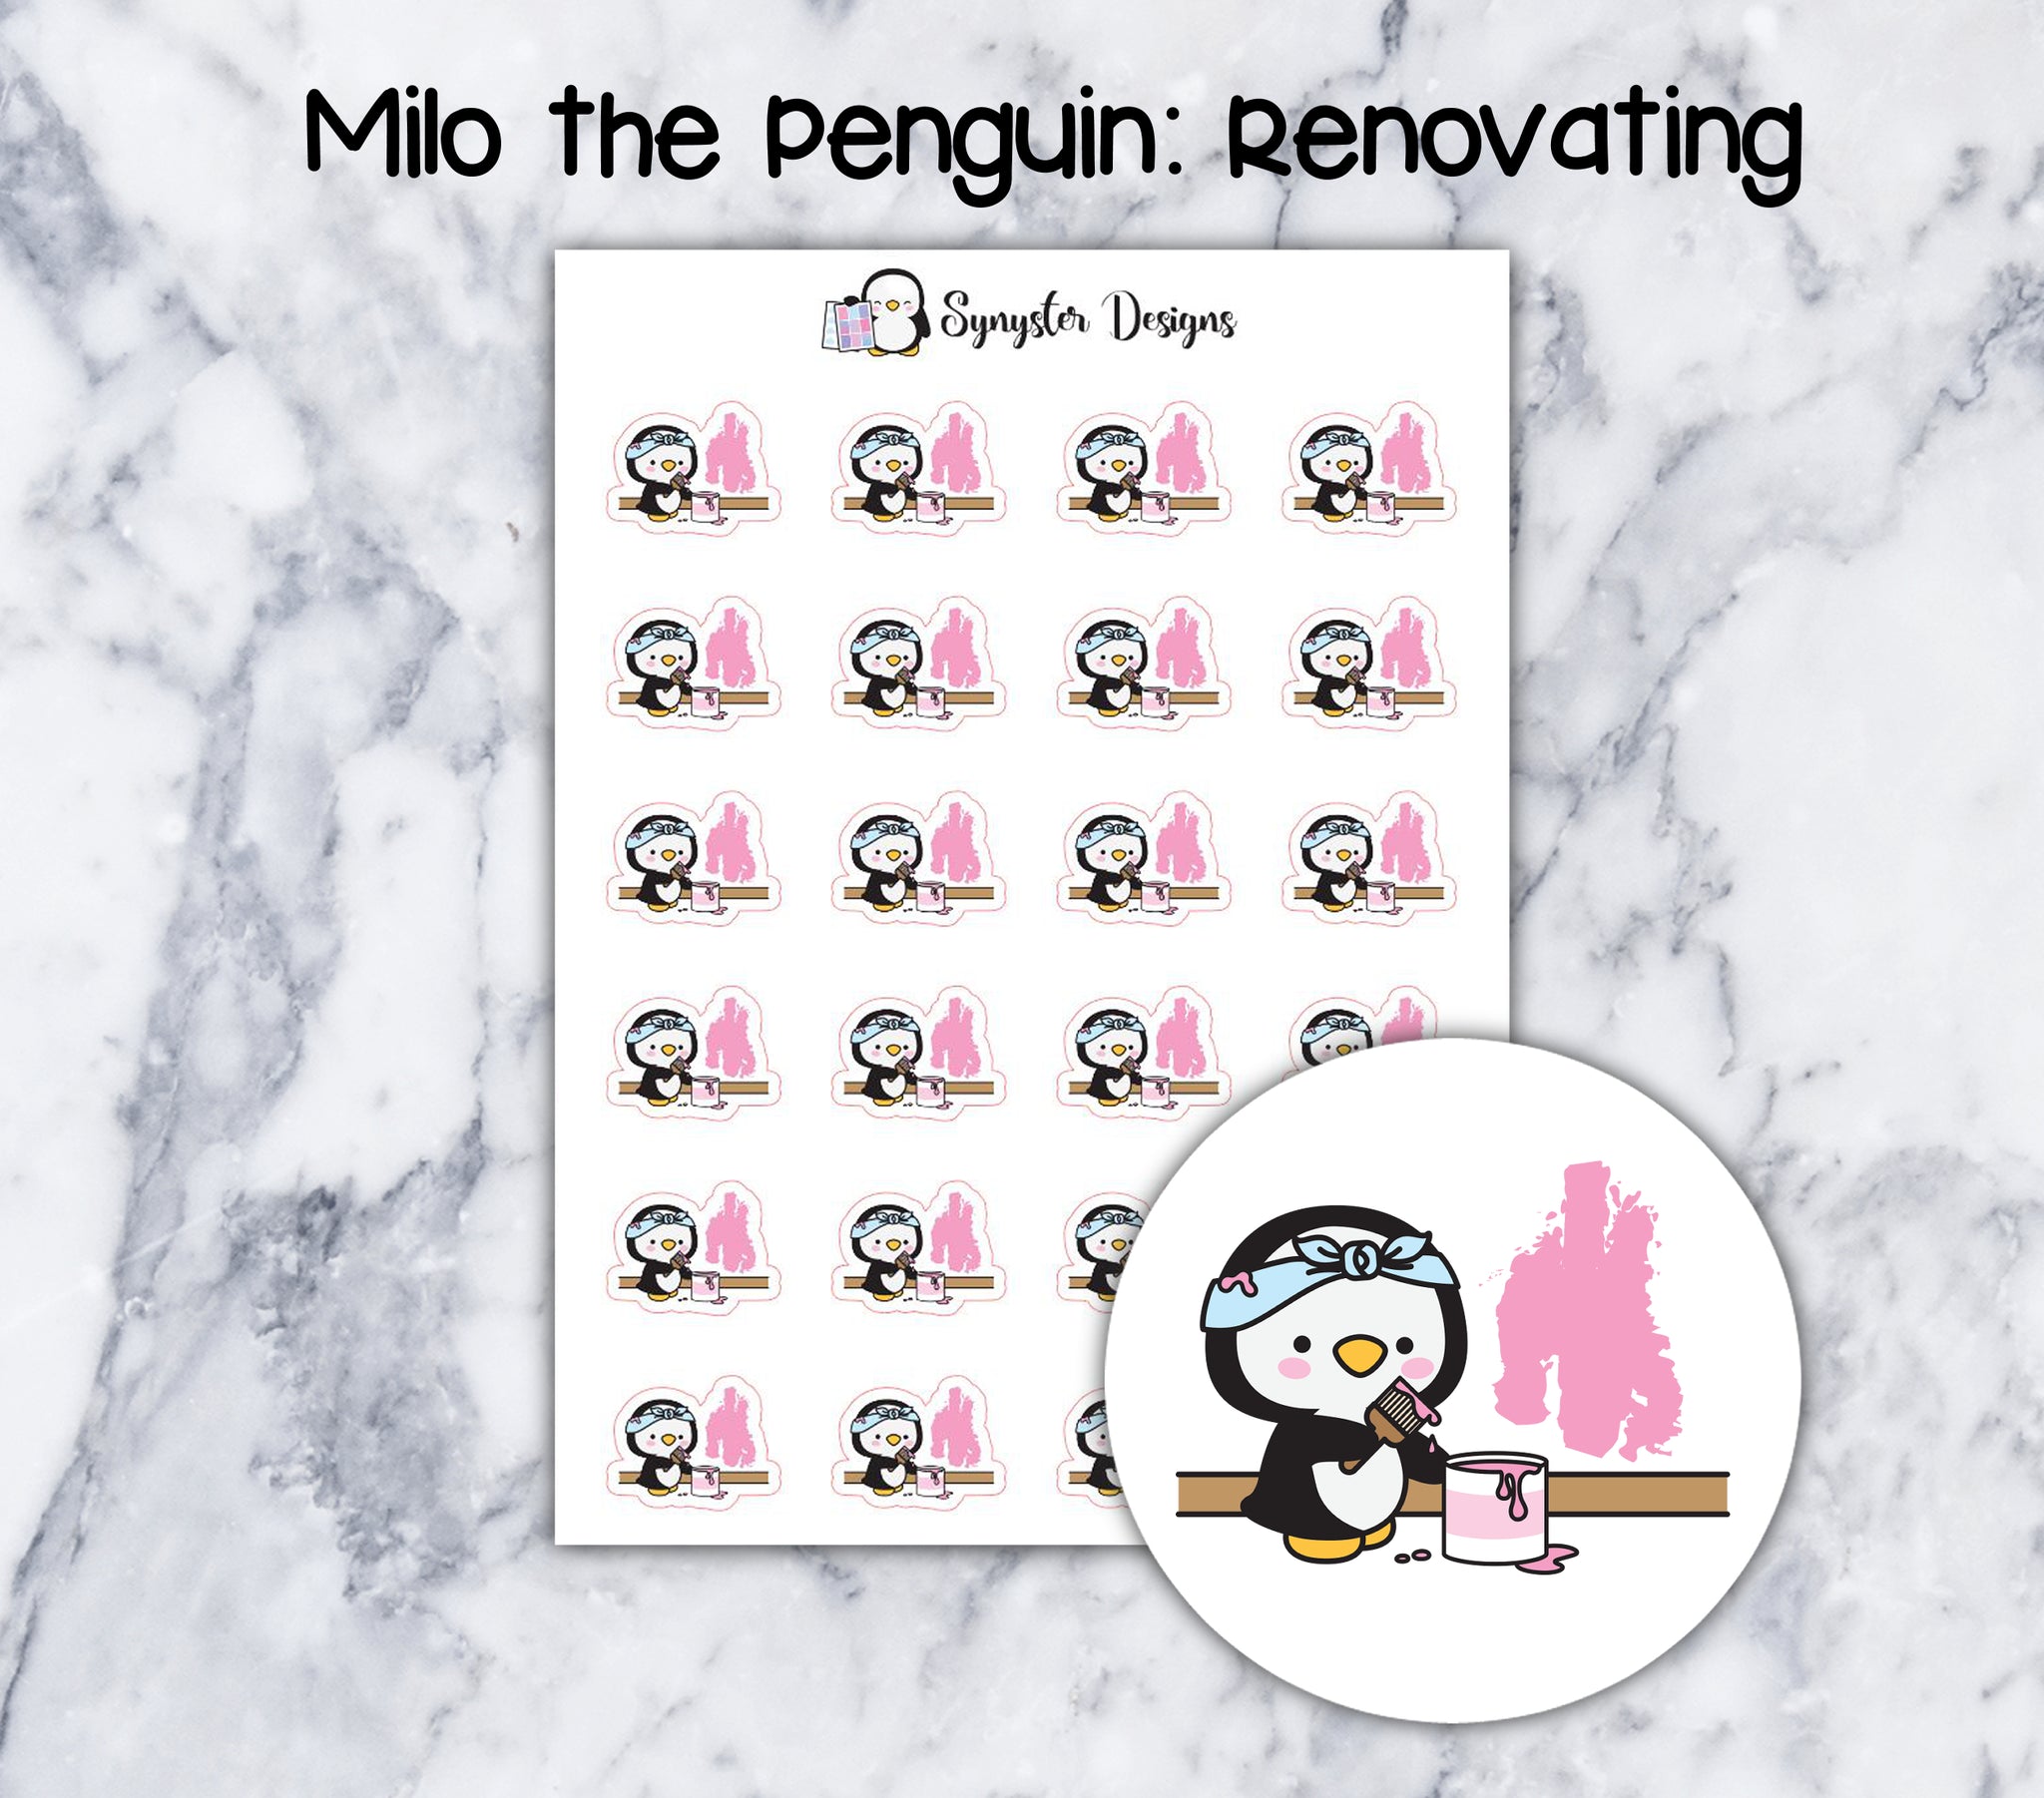 Renovating Milo the Penguin